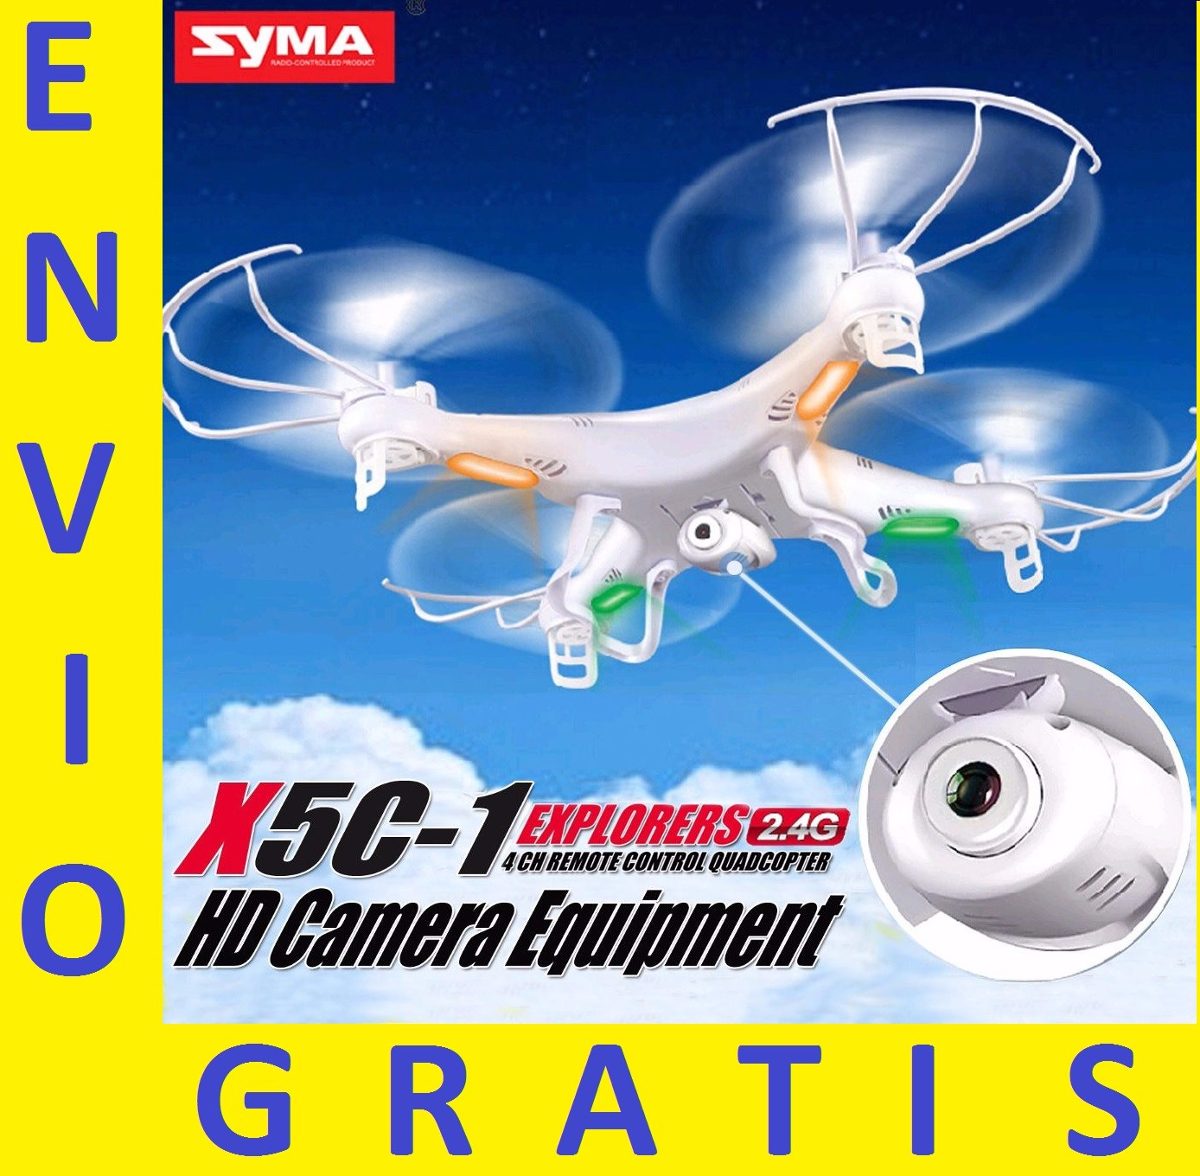 Drone Syma X5c-1 Camara De Video Hd Micro Sd 2gb Gratis ...